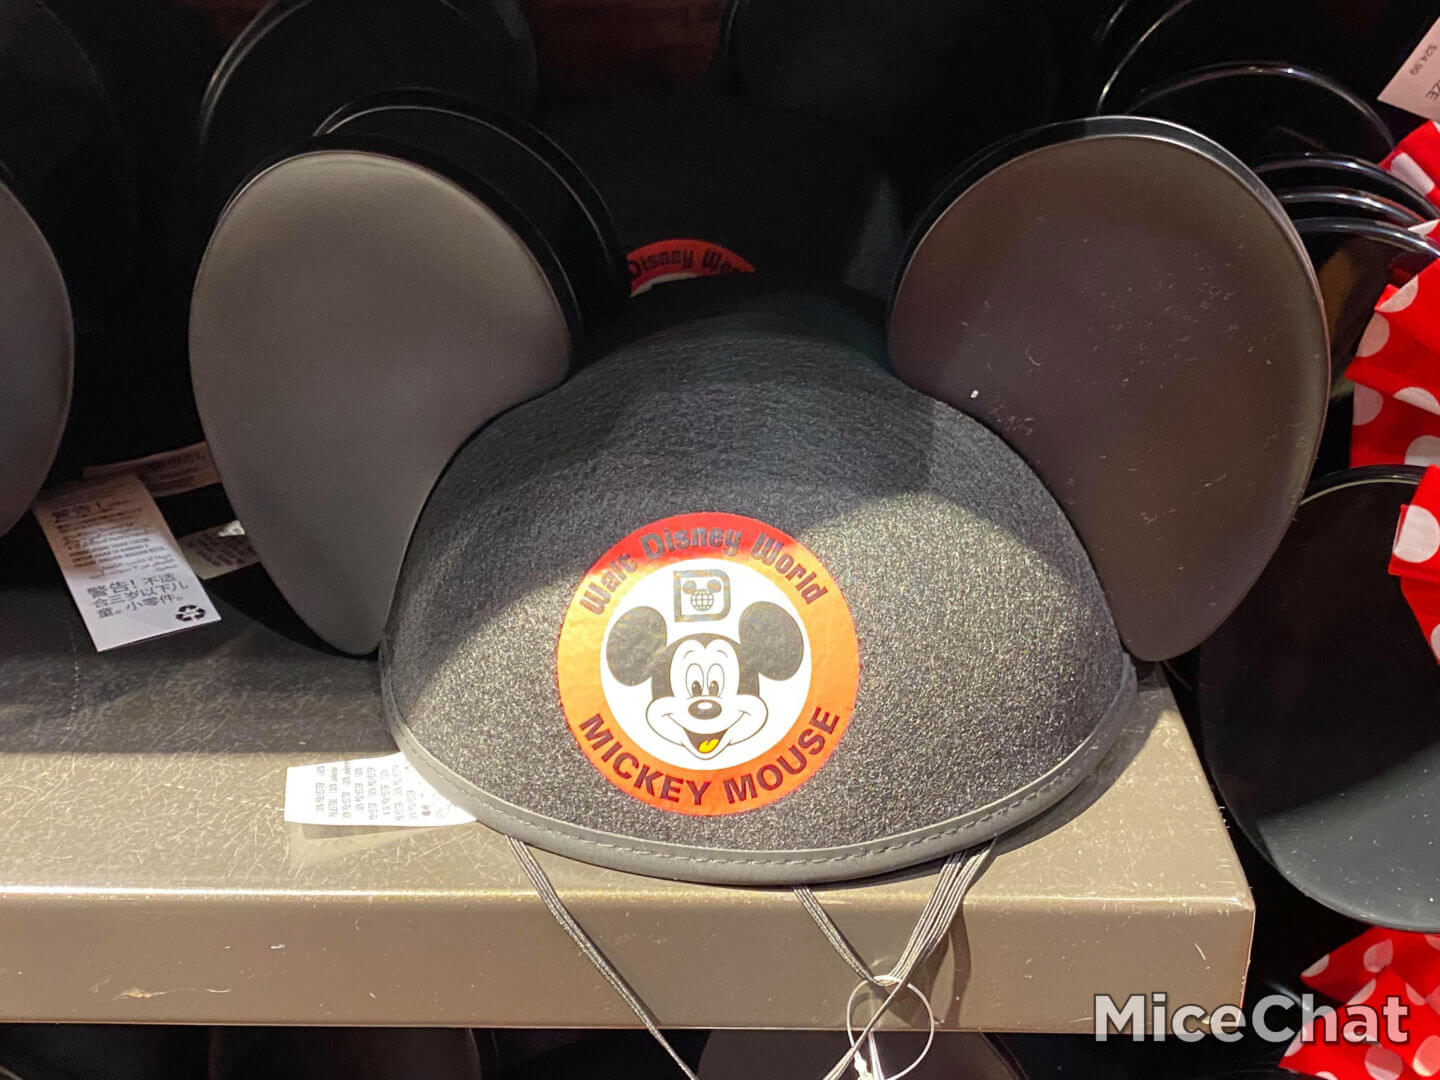 Disney, Accessories, Disney Vault Walt Disney World Minnie Mouse Patch  Piece